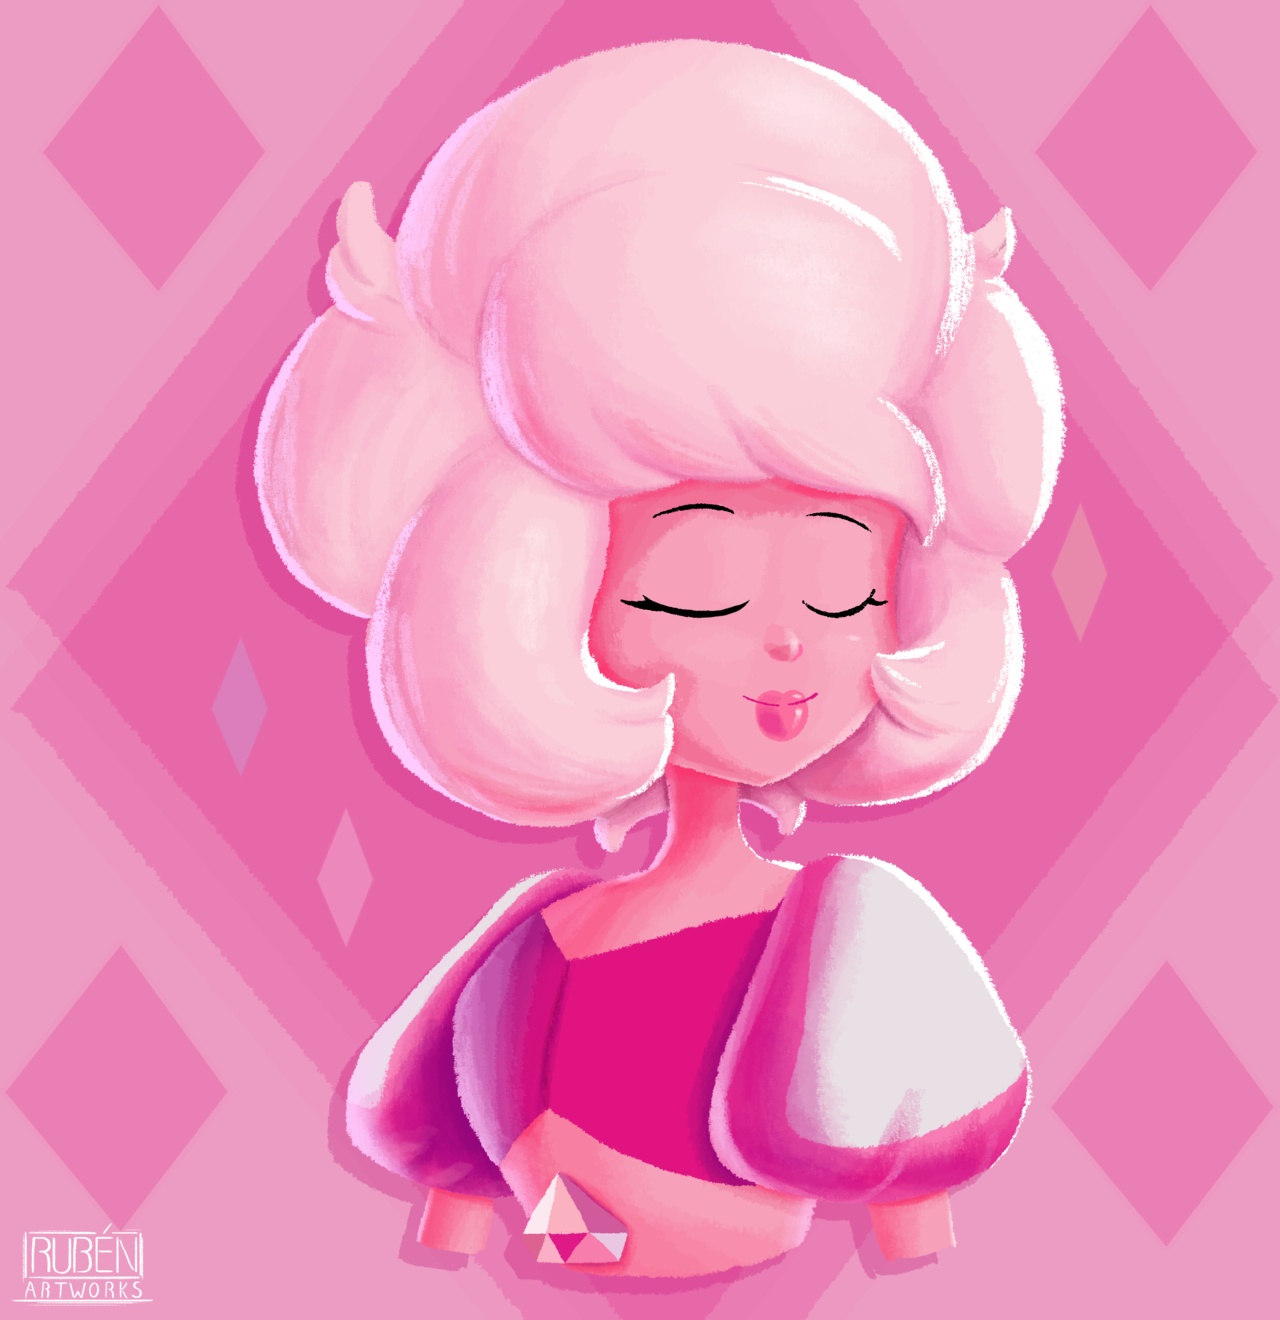 Fan art of Pink! i love this character https://www.instagram.com/ruben_artworks_/